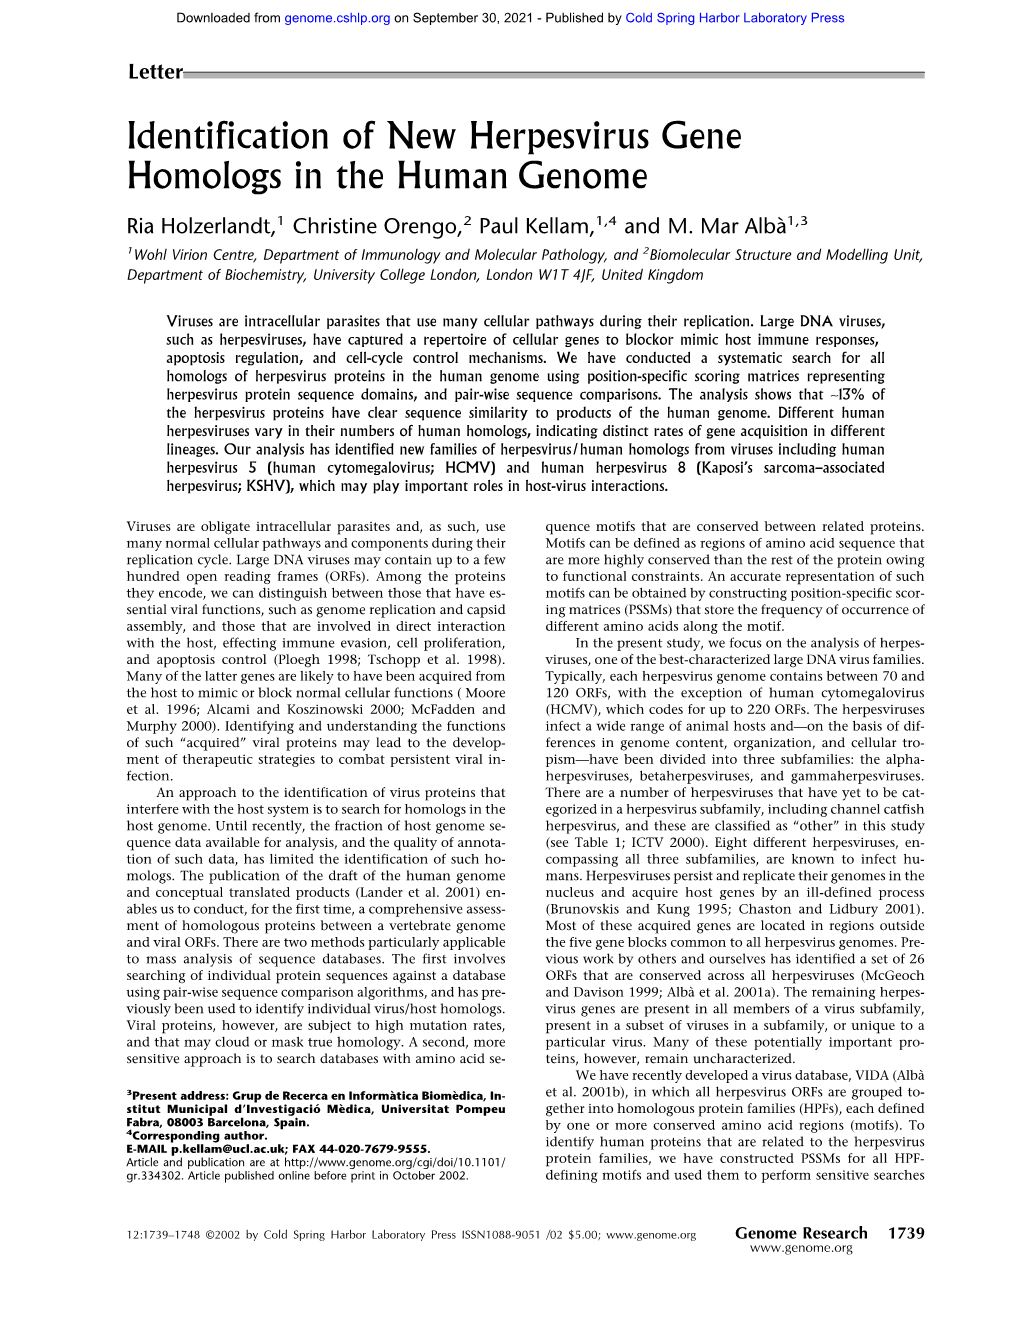 Identification of New Herpesvirus Gene Homologs in the Human Genome